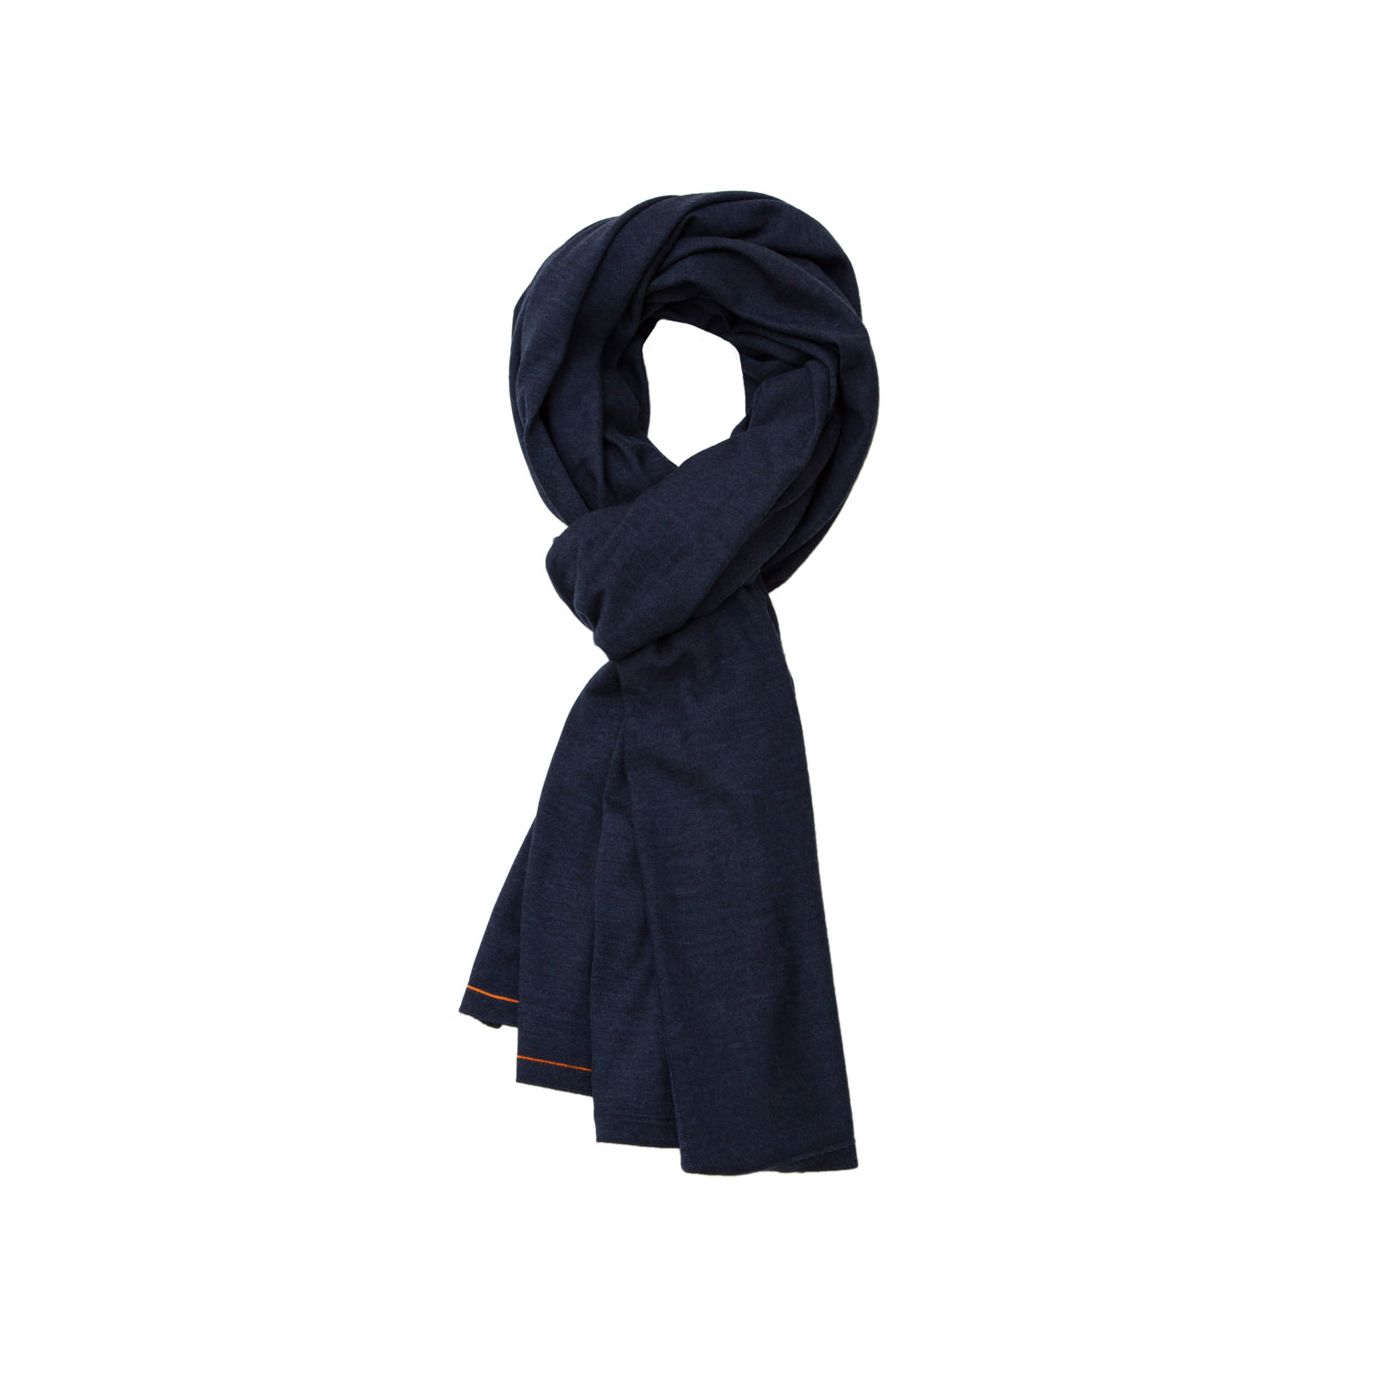 Scarf for men made of Merino wool in Dark blue